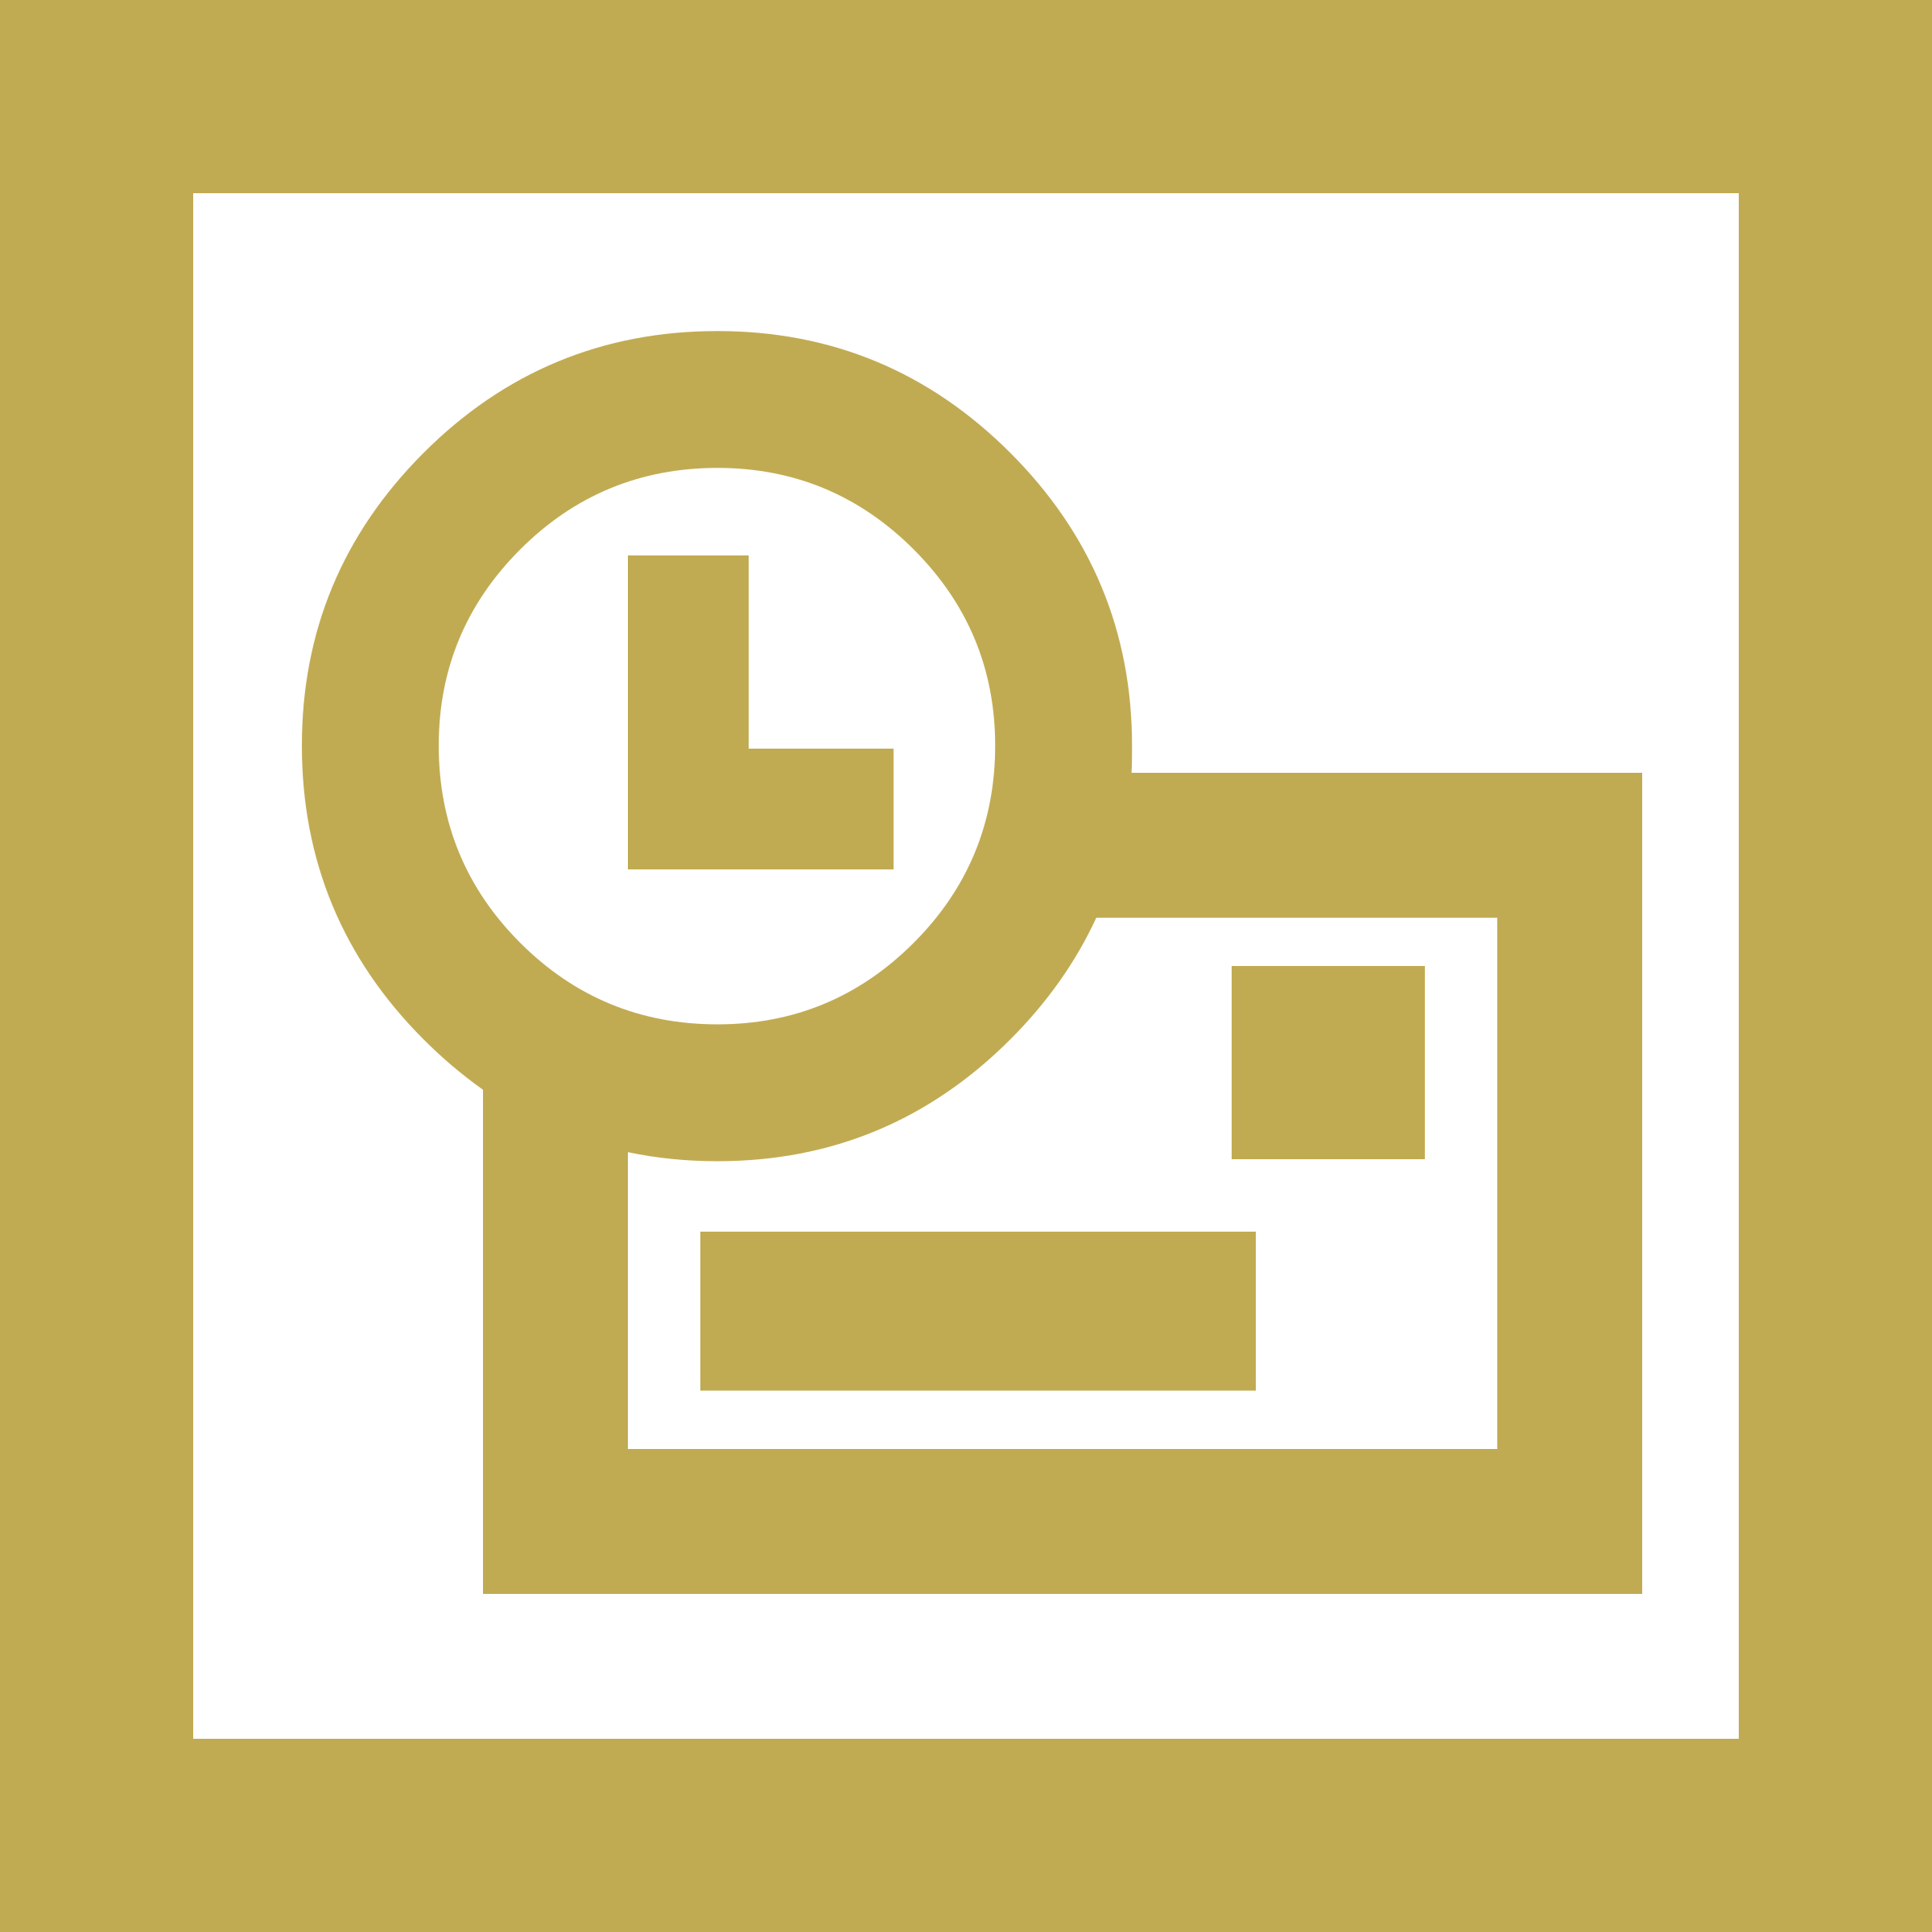 Outlook Transparent Logo - Microsoft Office Outlook Logo PNG Transparent & SVG Vector